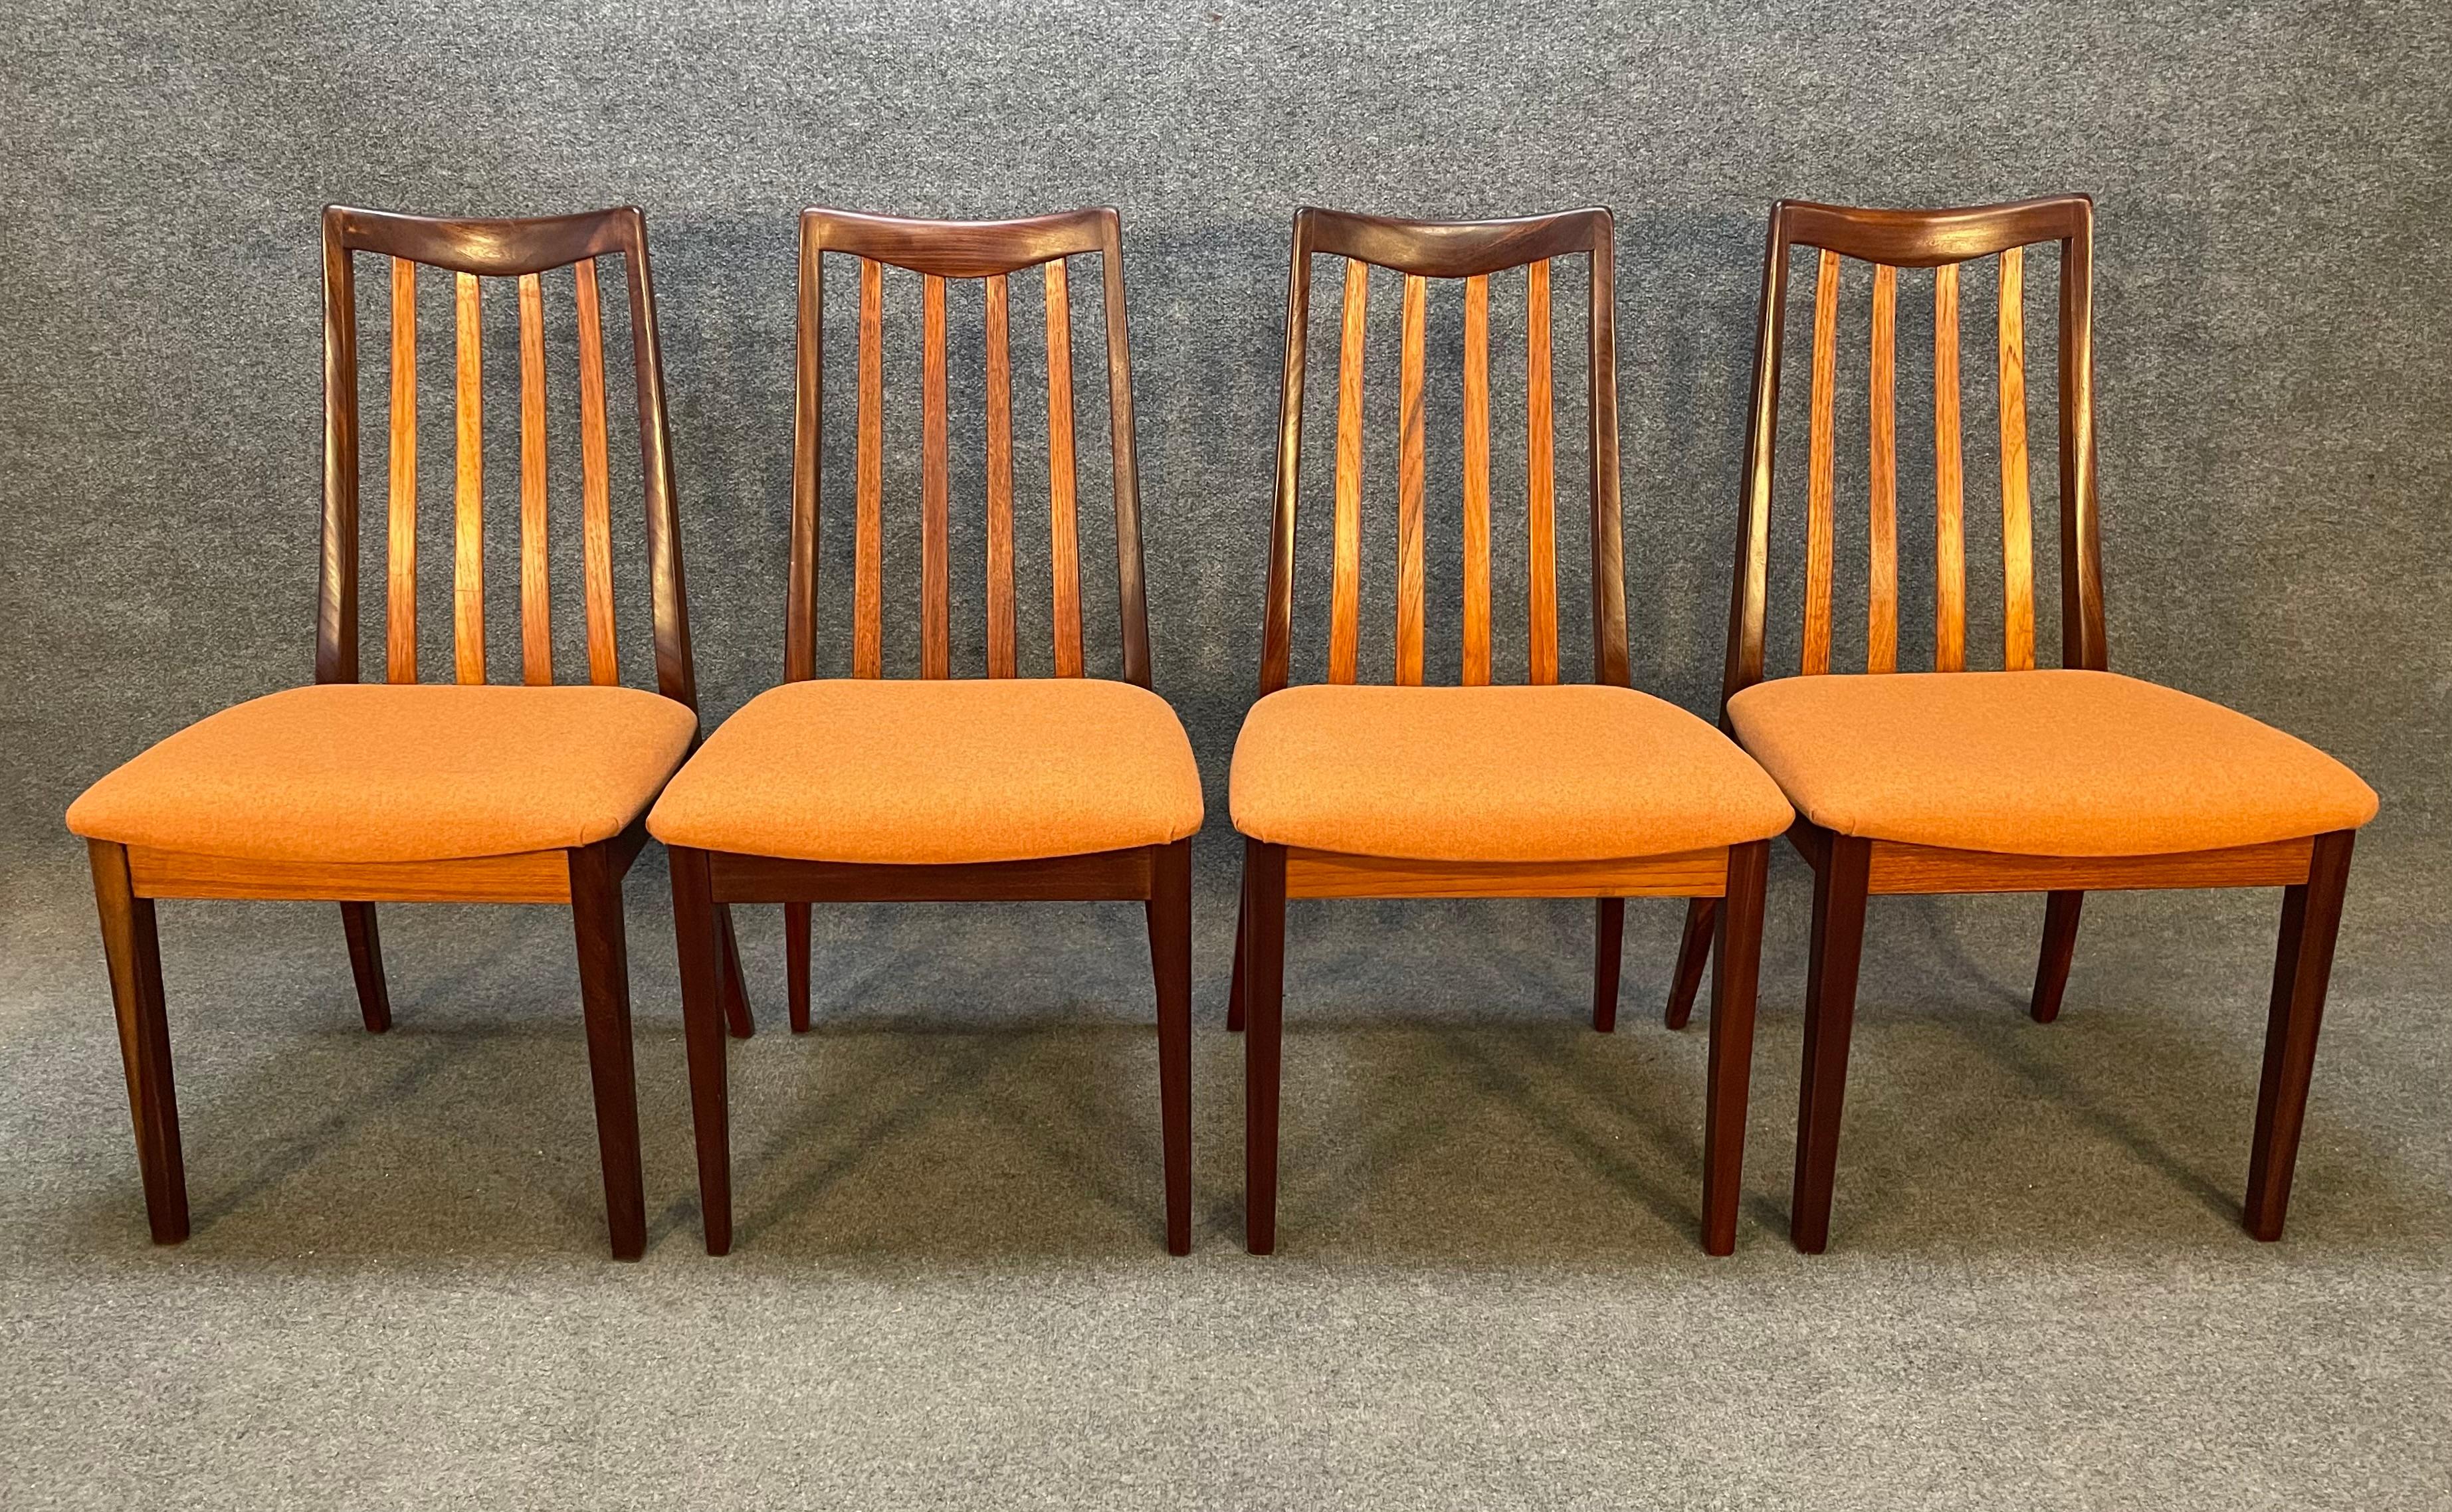 English Set of Four Vintage British Mid-Century Modern Teak Dining Chairs by G Plan